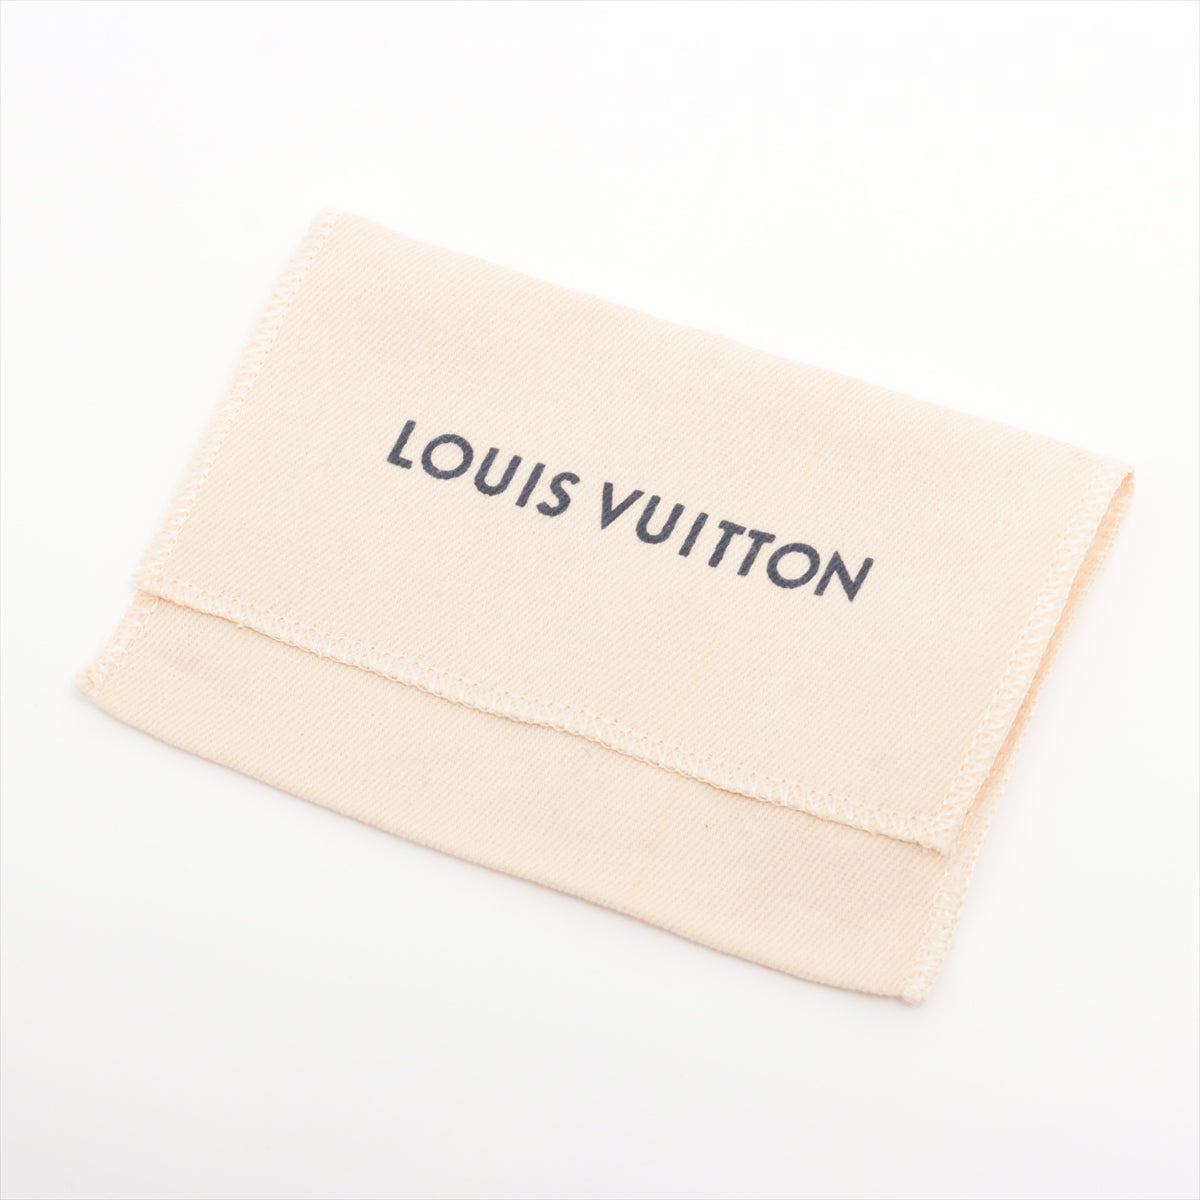 Louis Vuitton Monogram Multicell 4 M69517 Brown Key Case